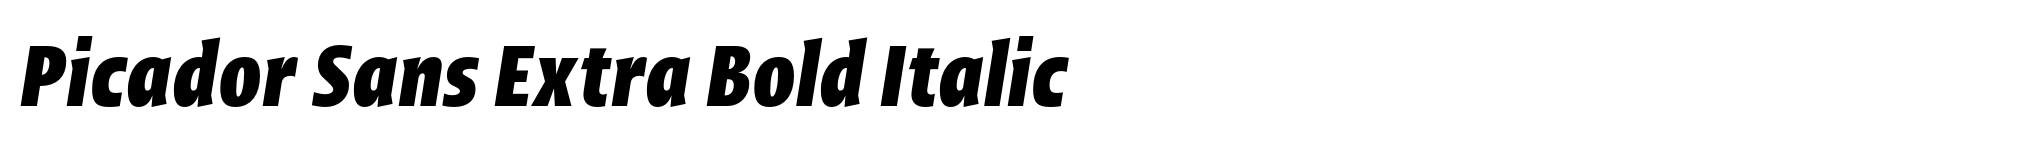 Picador Sans Extra Bold Italic image